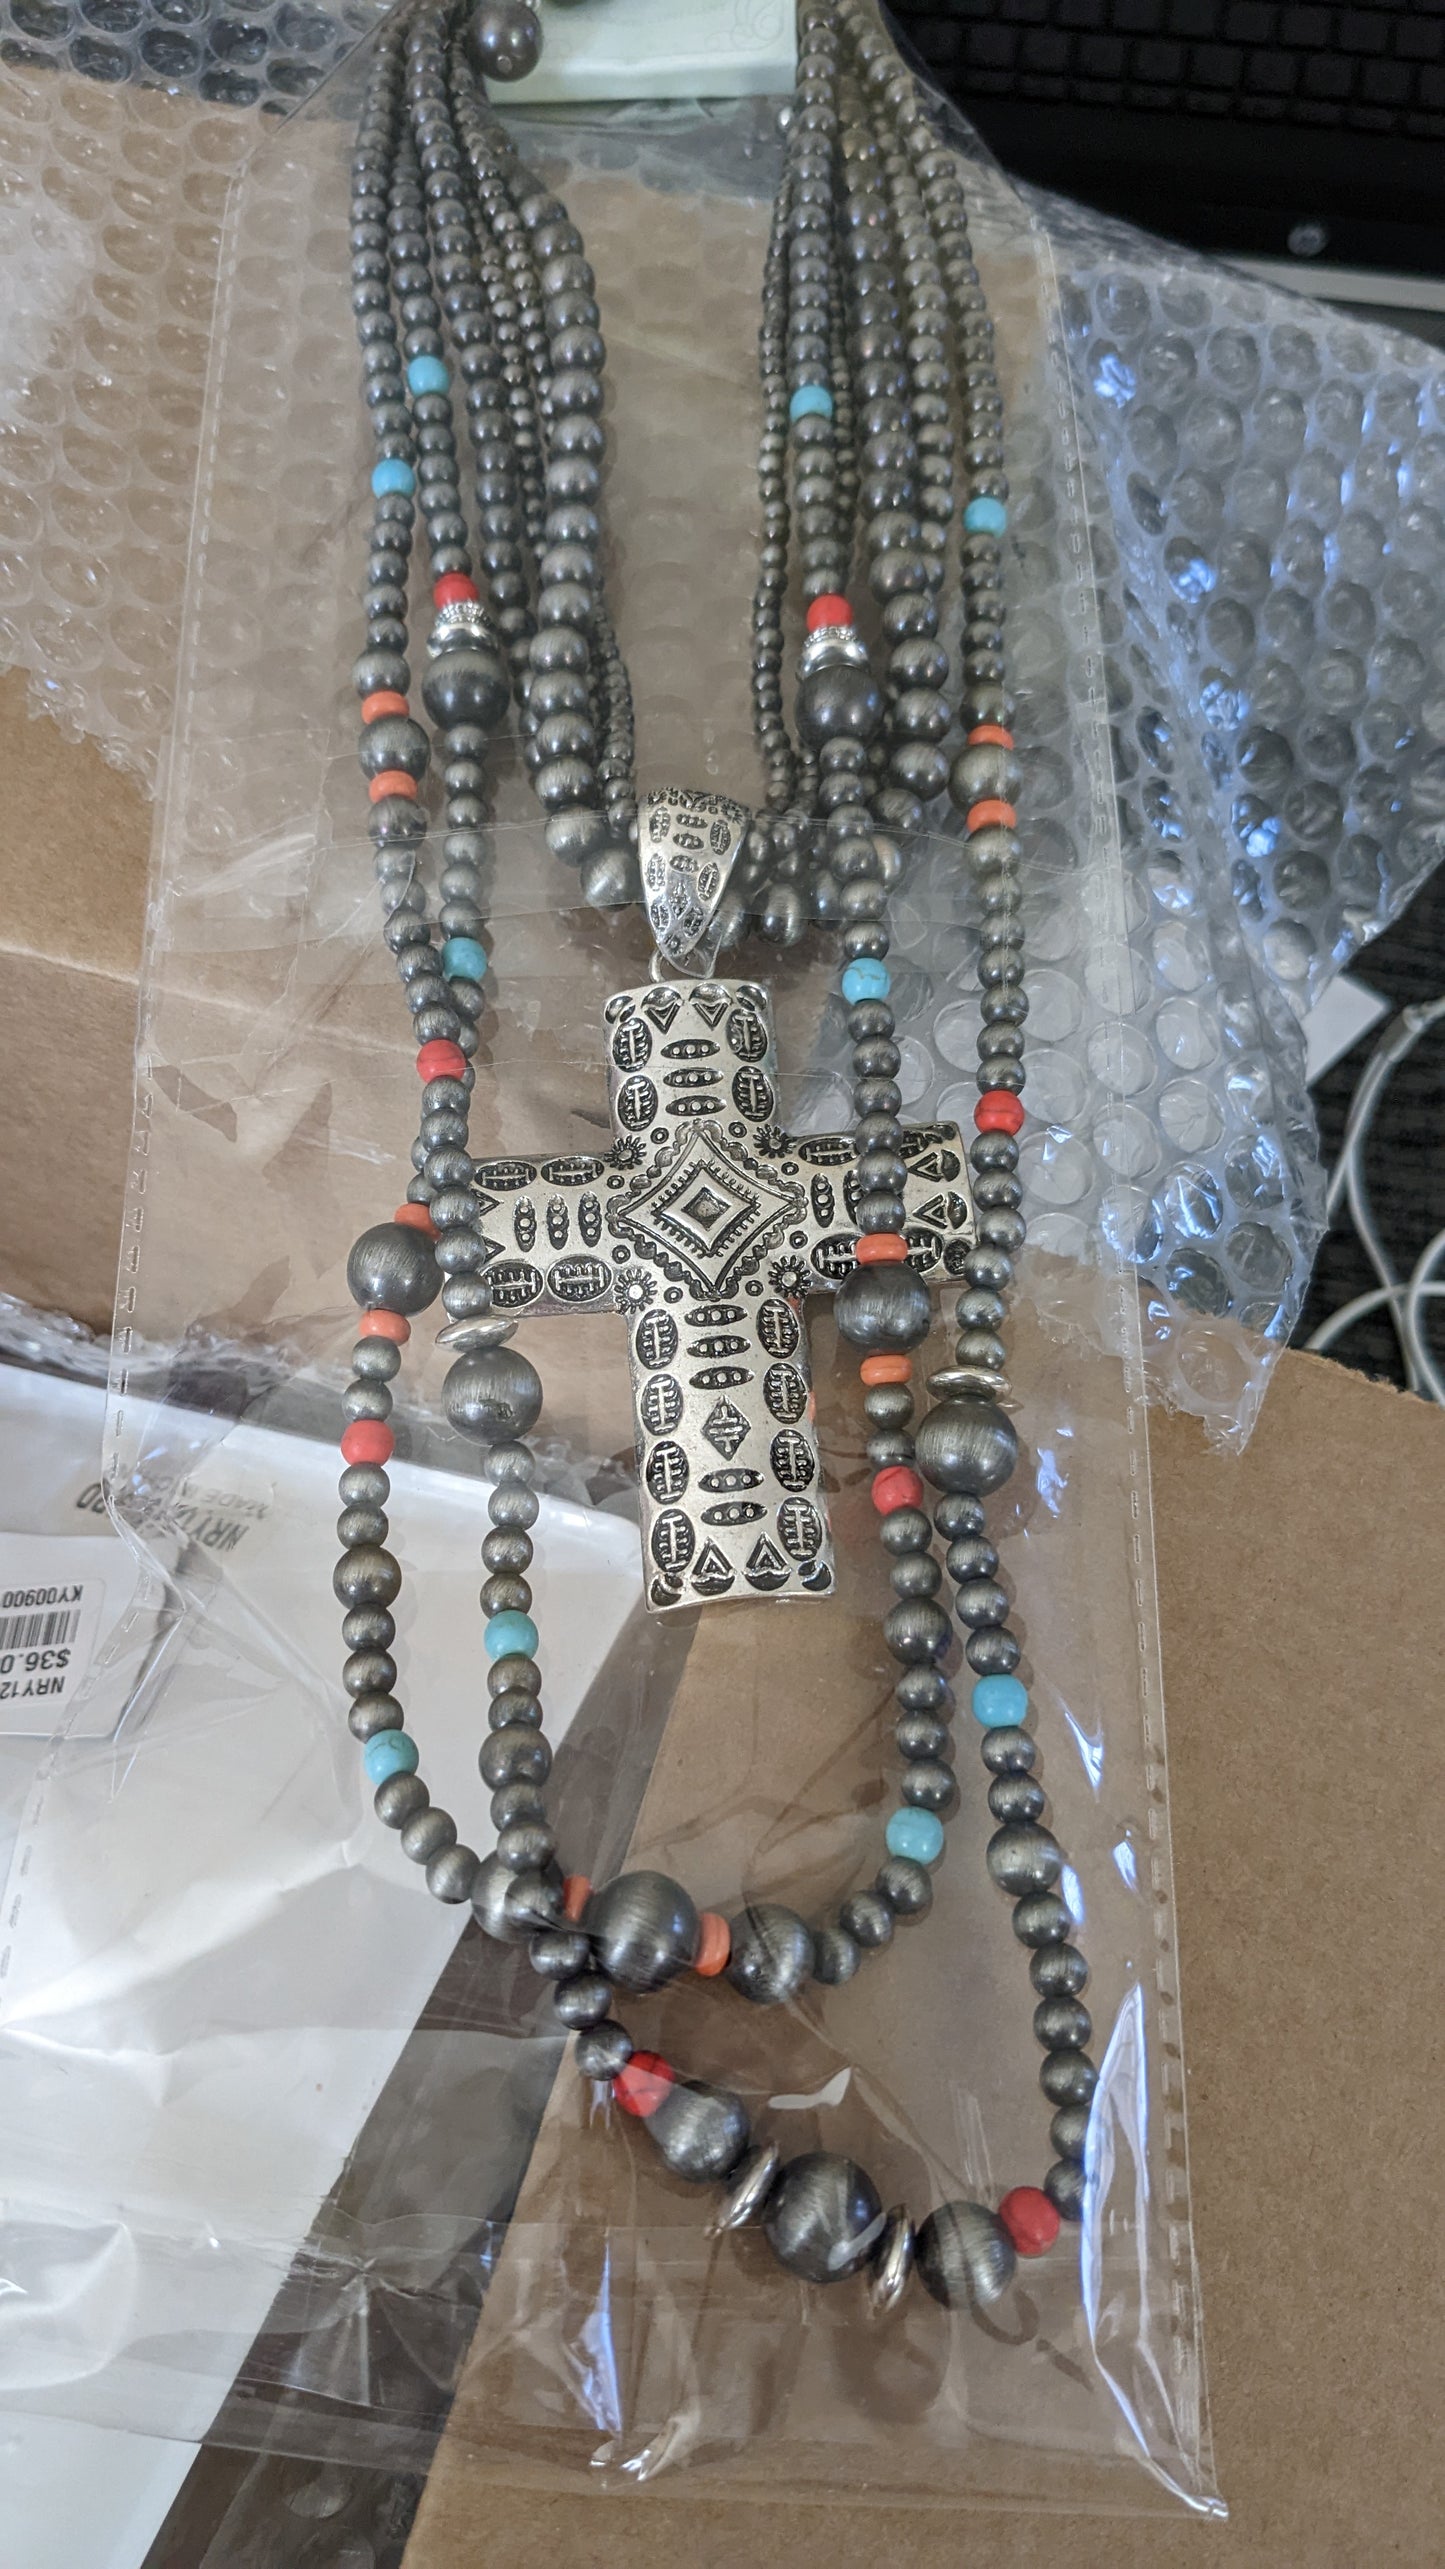 Cross Pendant Multi Layered Navajo Pearl Beaded Necklace